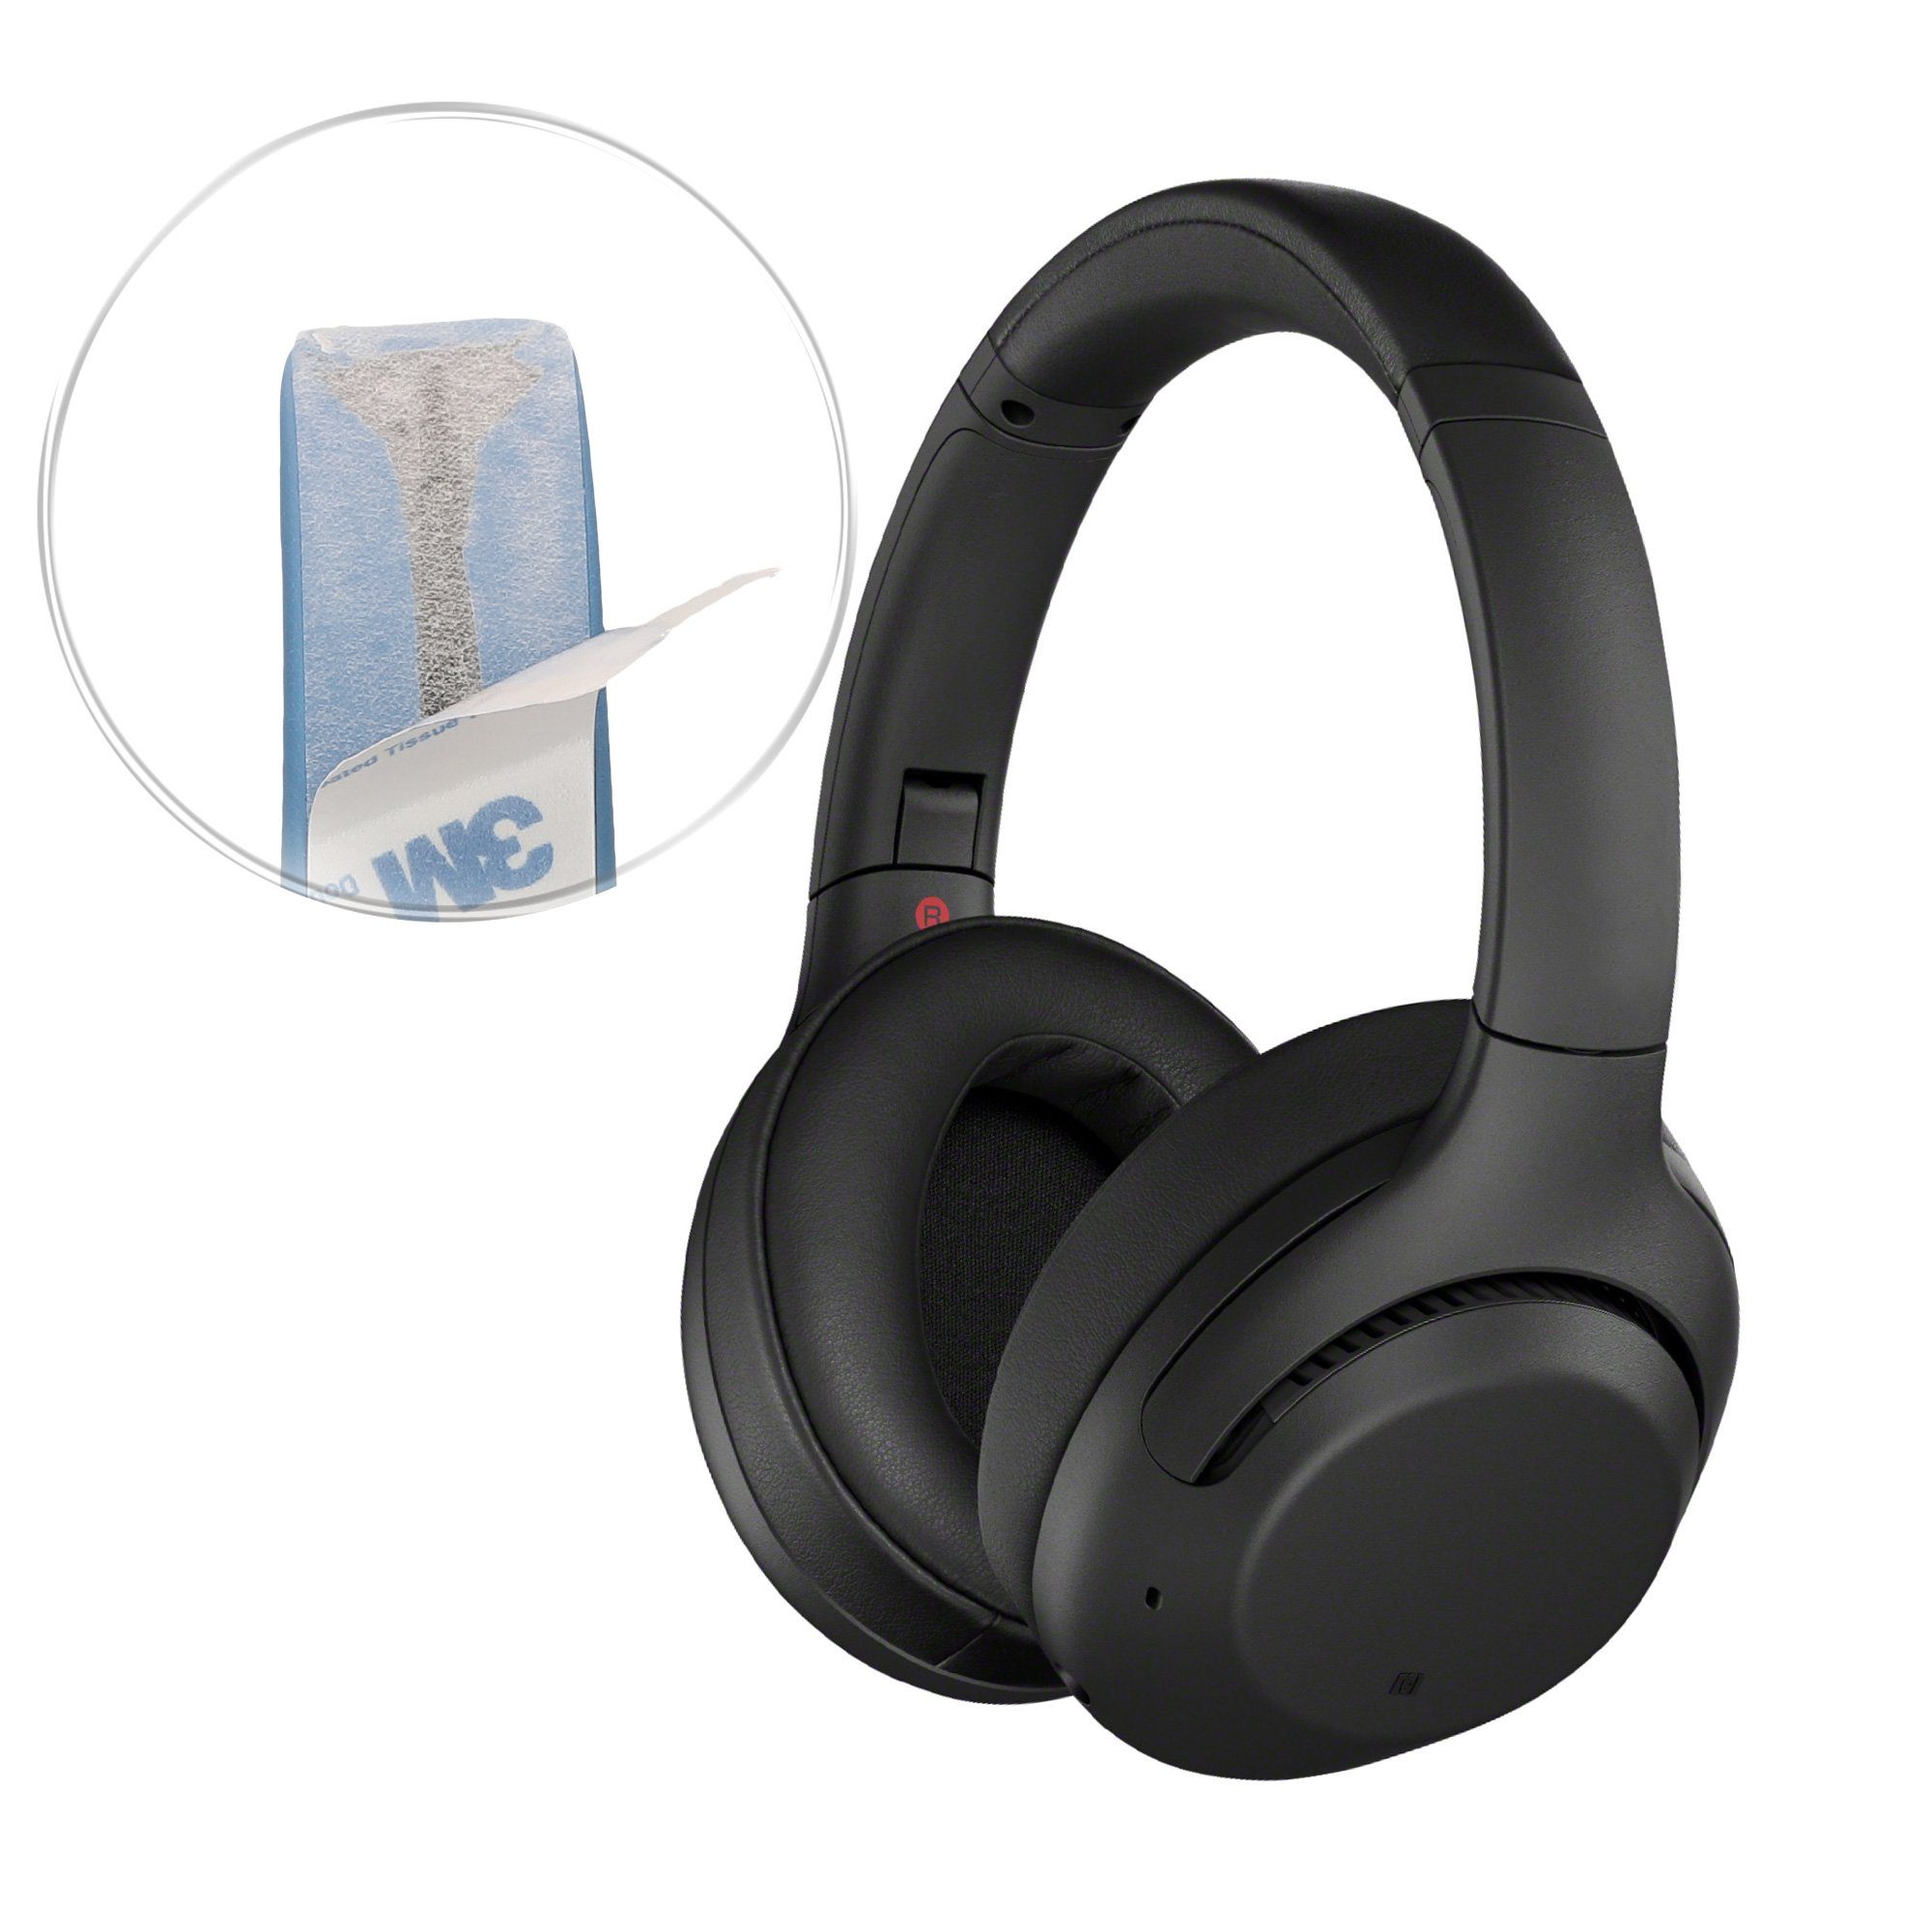 für für Bügelpolster Headphones Bügelpolster kwmobile Kunstleder Kopfbügel WH-CH520, Polster Sony Overear